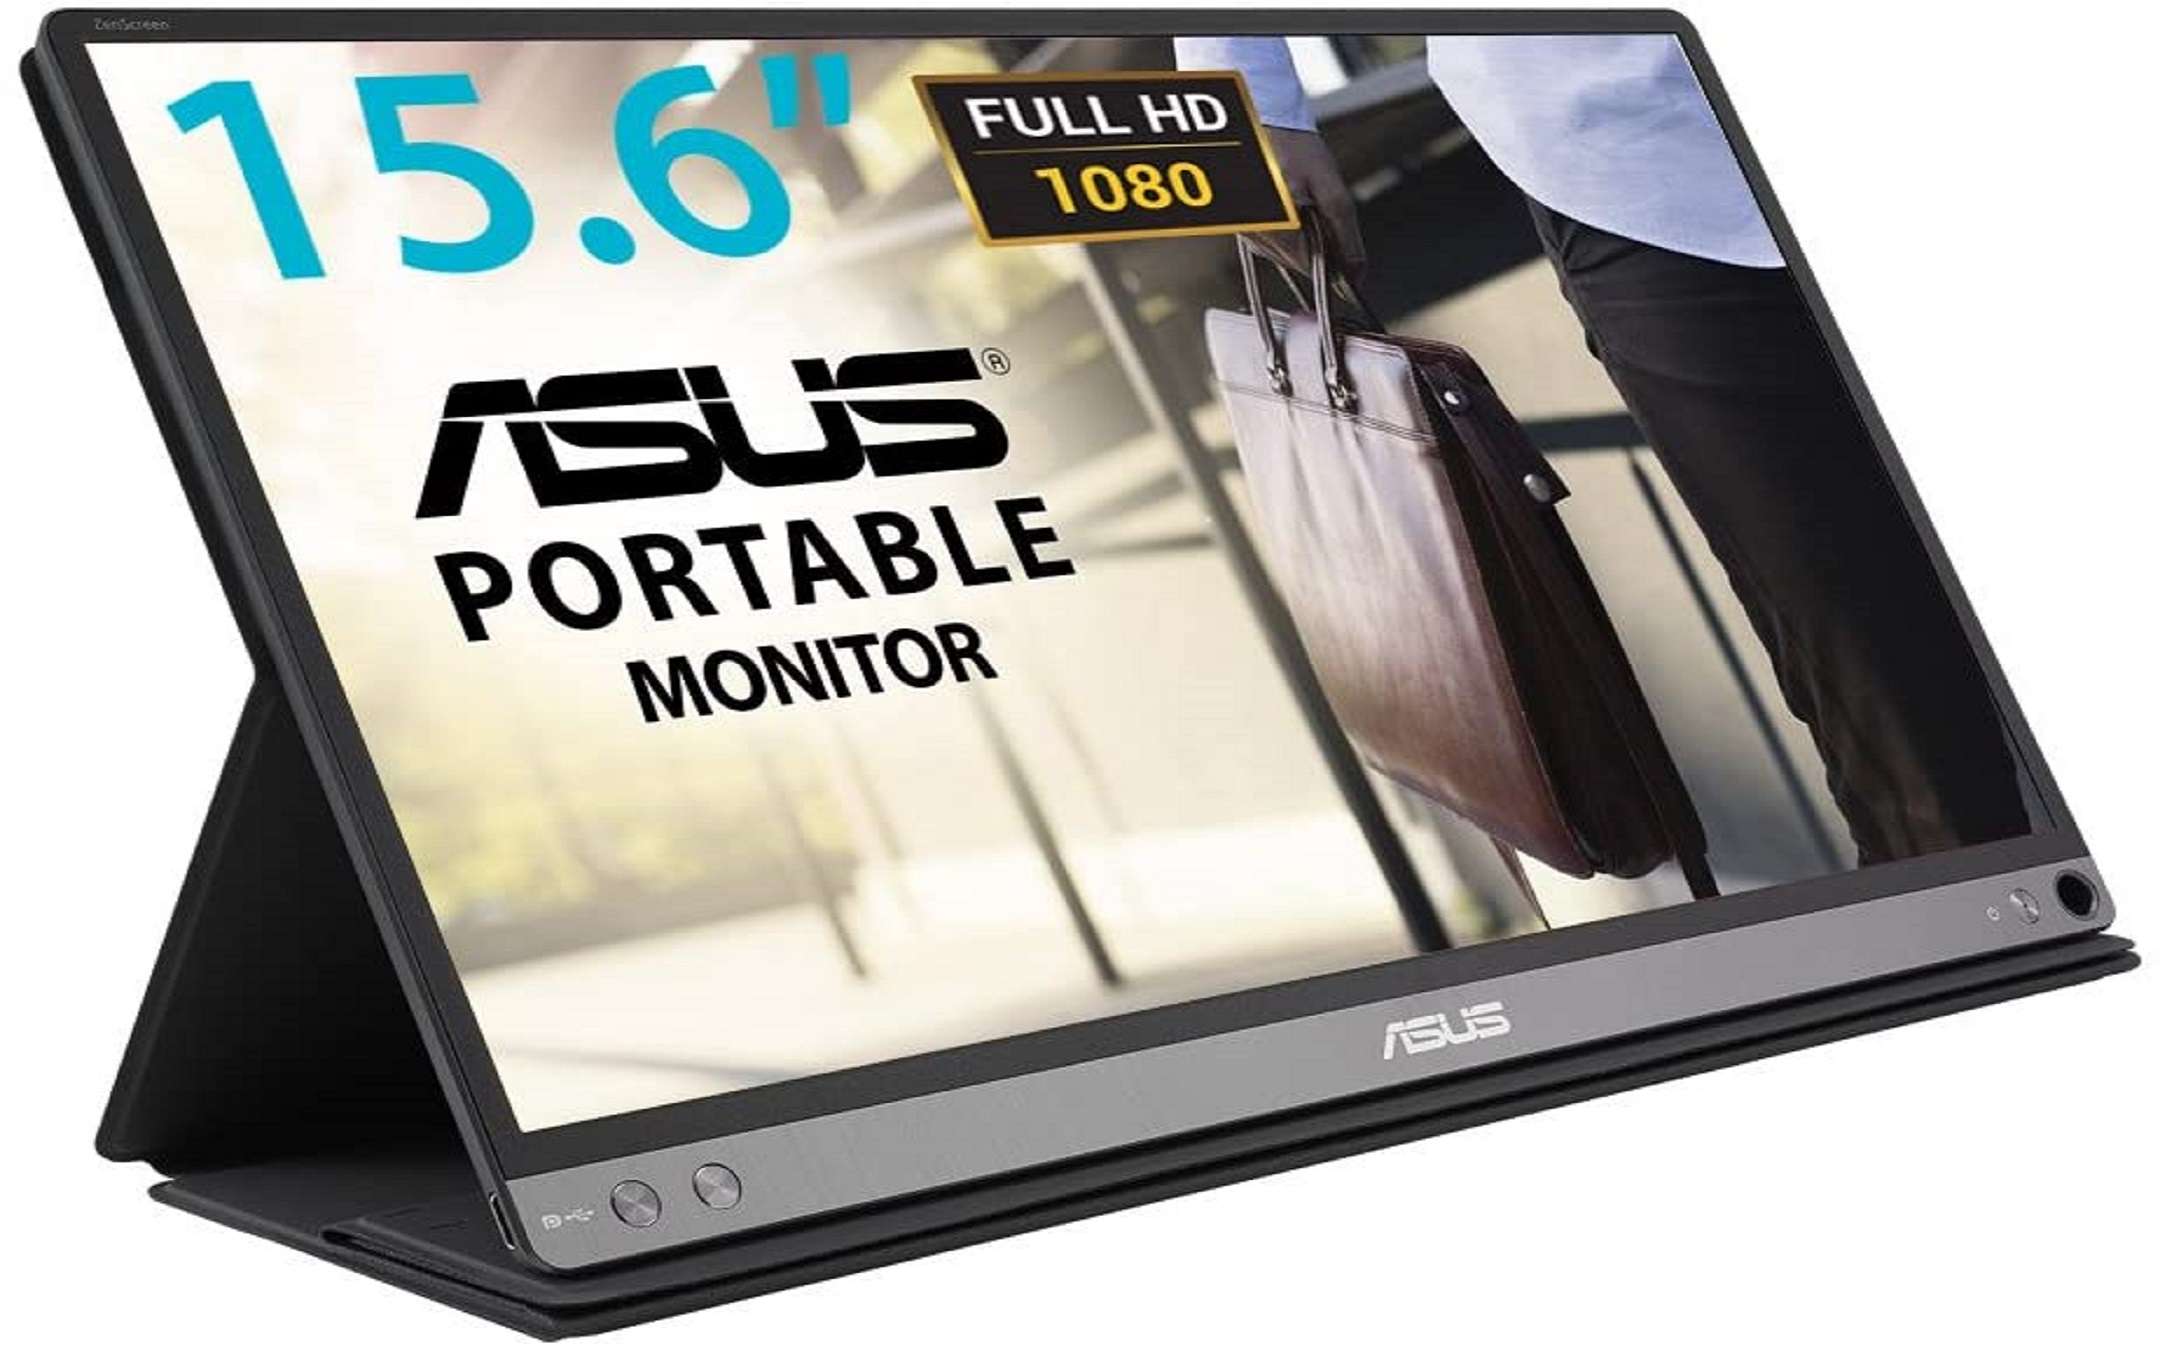 ASUS ZenScreen Portable Monitor: 35% discount on Amazon